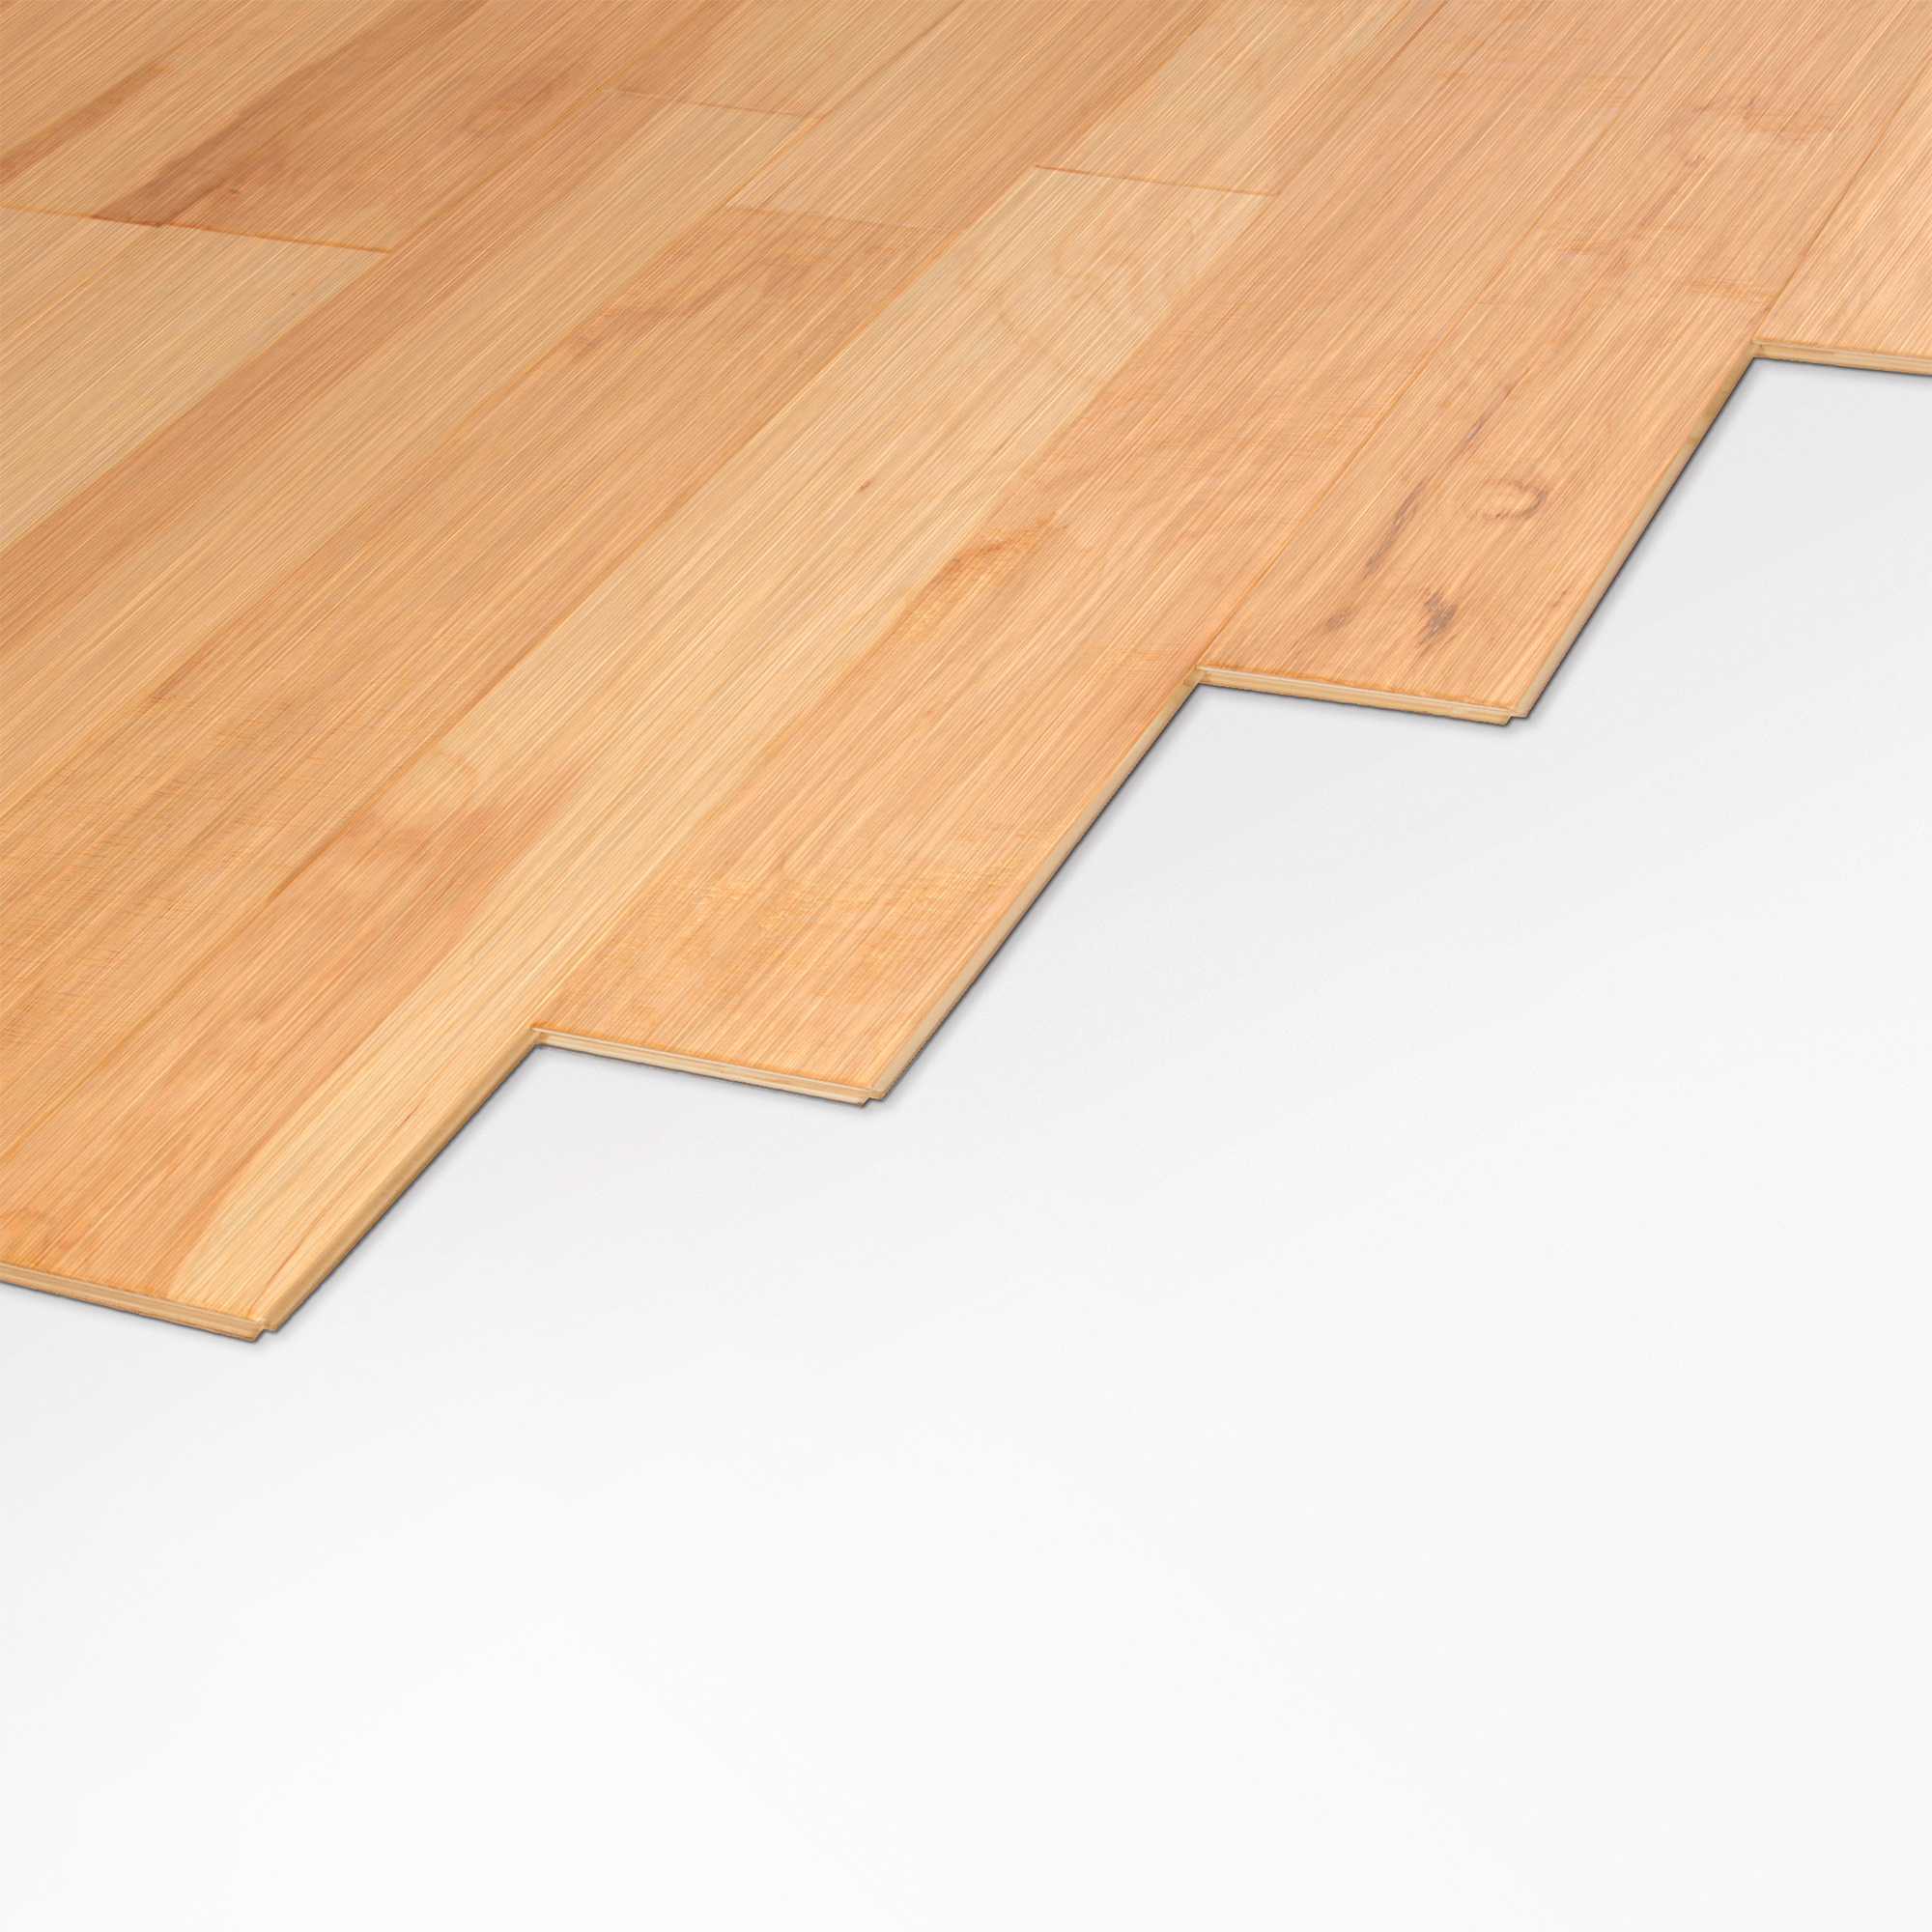 Silicone Moisture Barrier Roberts, Best Moisture Barrier For Hardwood Floors